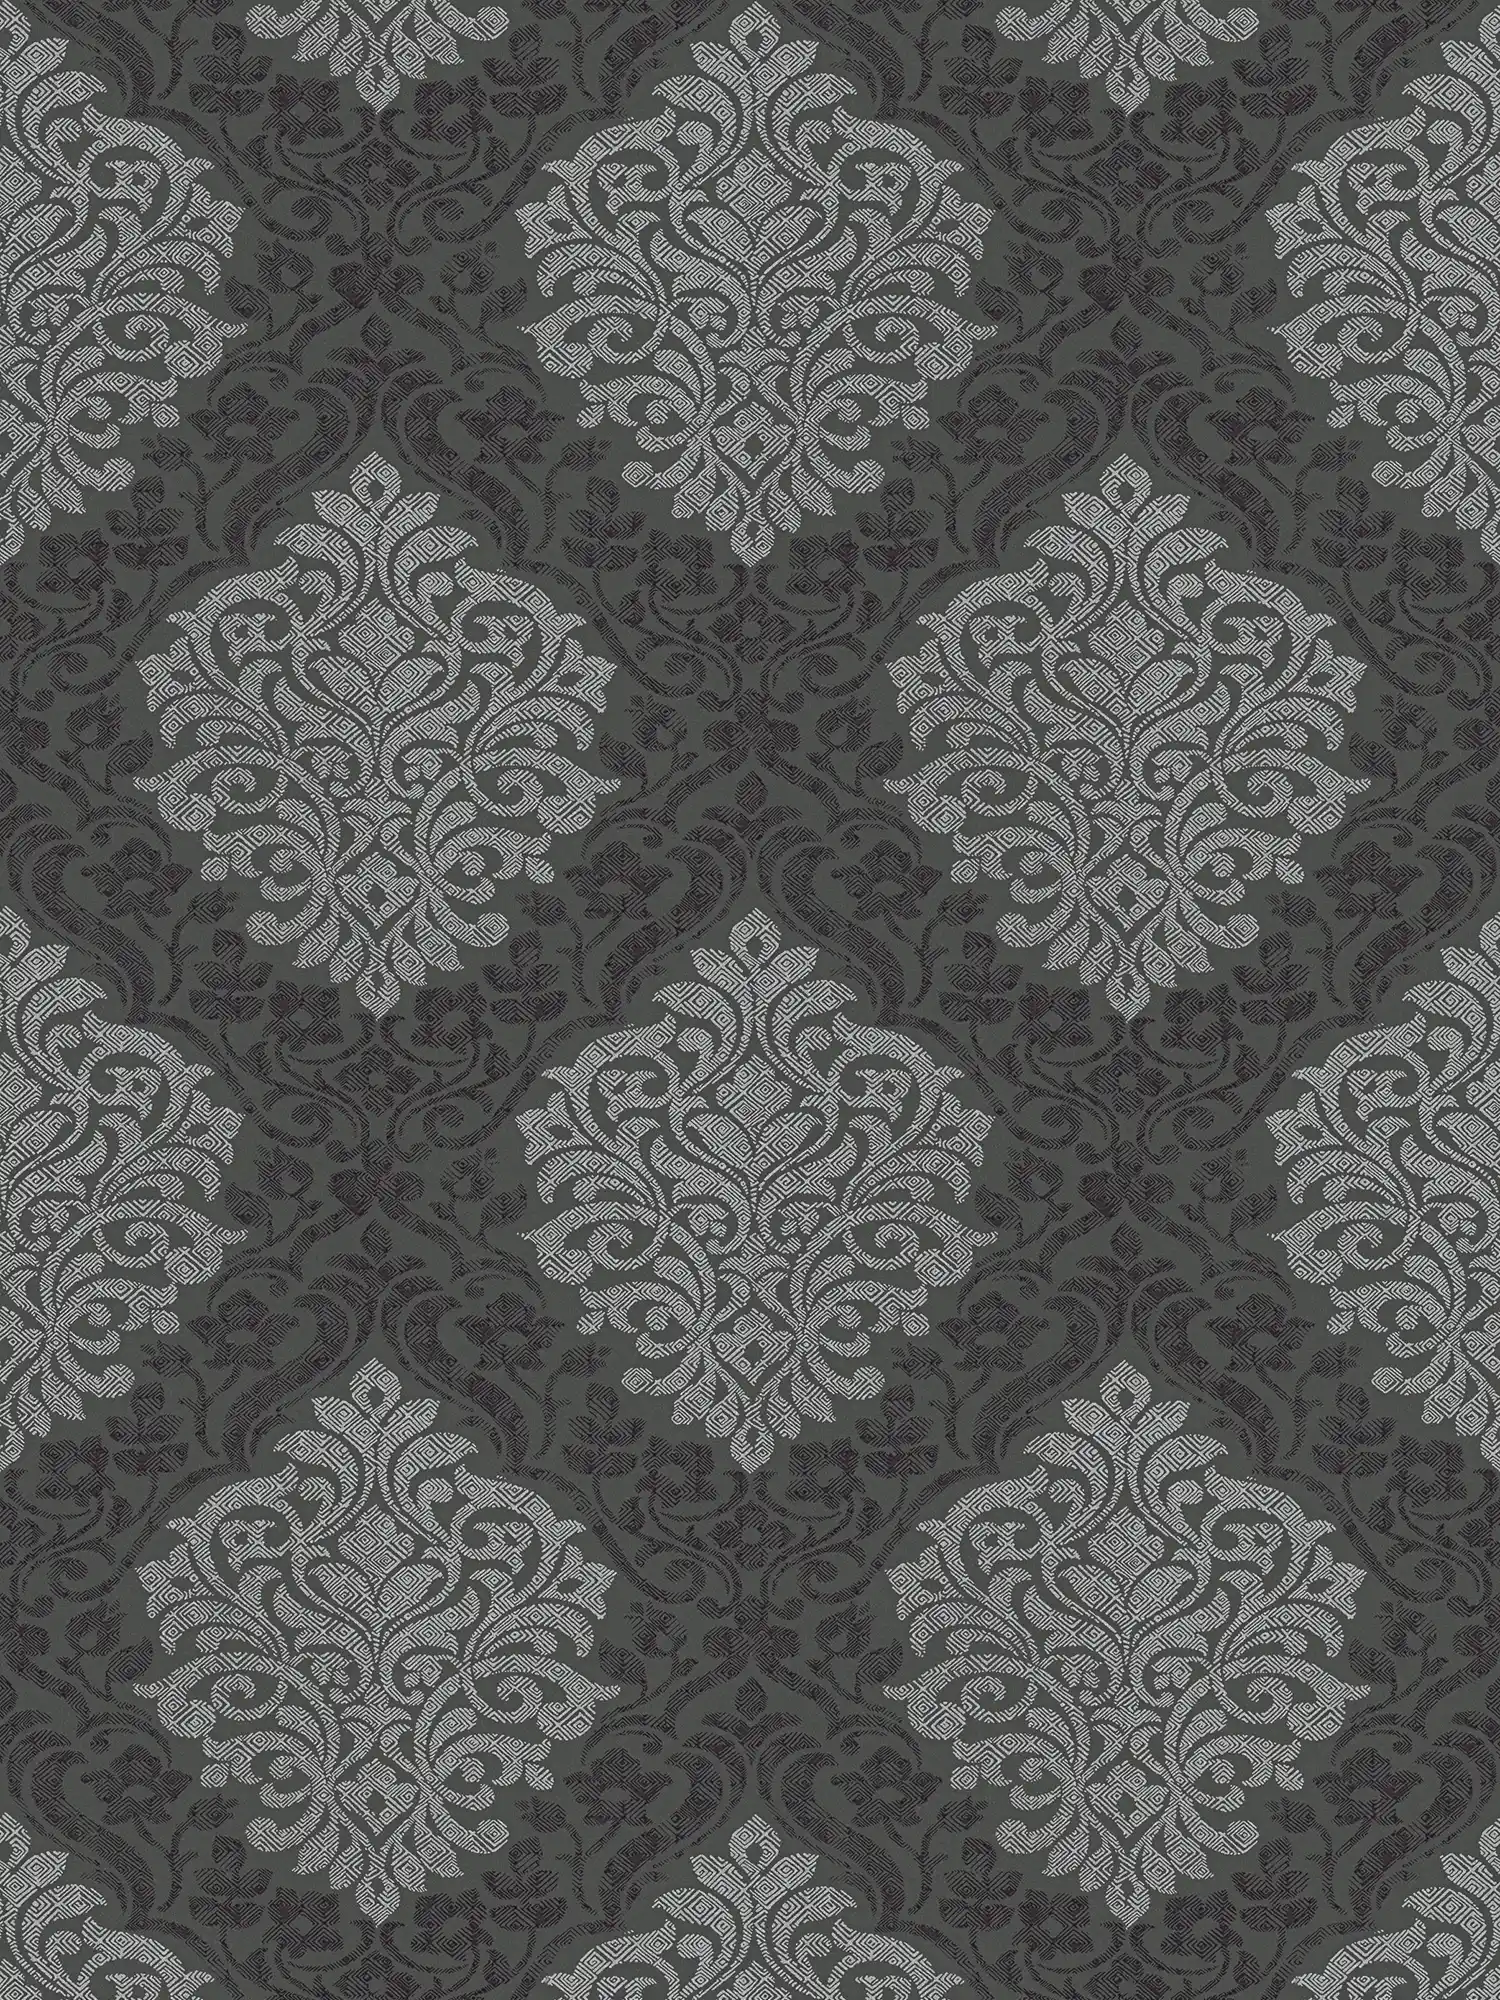 Floral ornamental wallpaper diamond pattern in ethnic style - silver, black, grey
